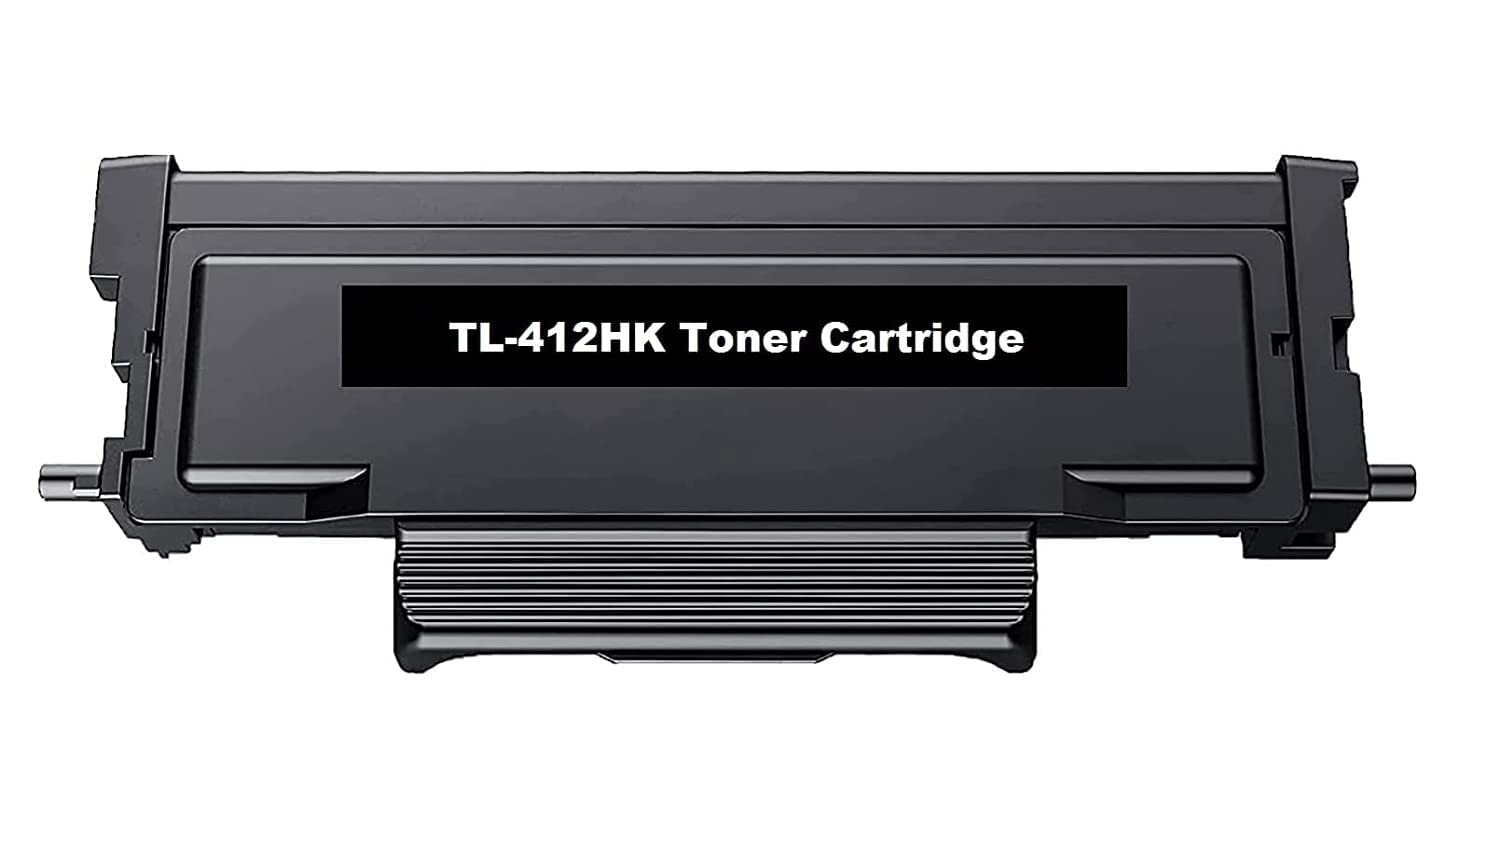 TL-412HK Toner Cartridge Compatible with Pantum M7102DN, M7102DW, M7202FDN, M7302FDN, M7302FDW, P3012D, P3012DW, P3302DN, P3302DW (TL-412HK Cartridge) (TL-412HK Toner Cartridge)